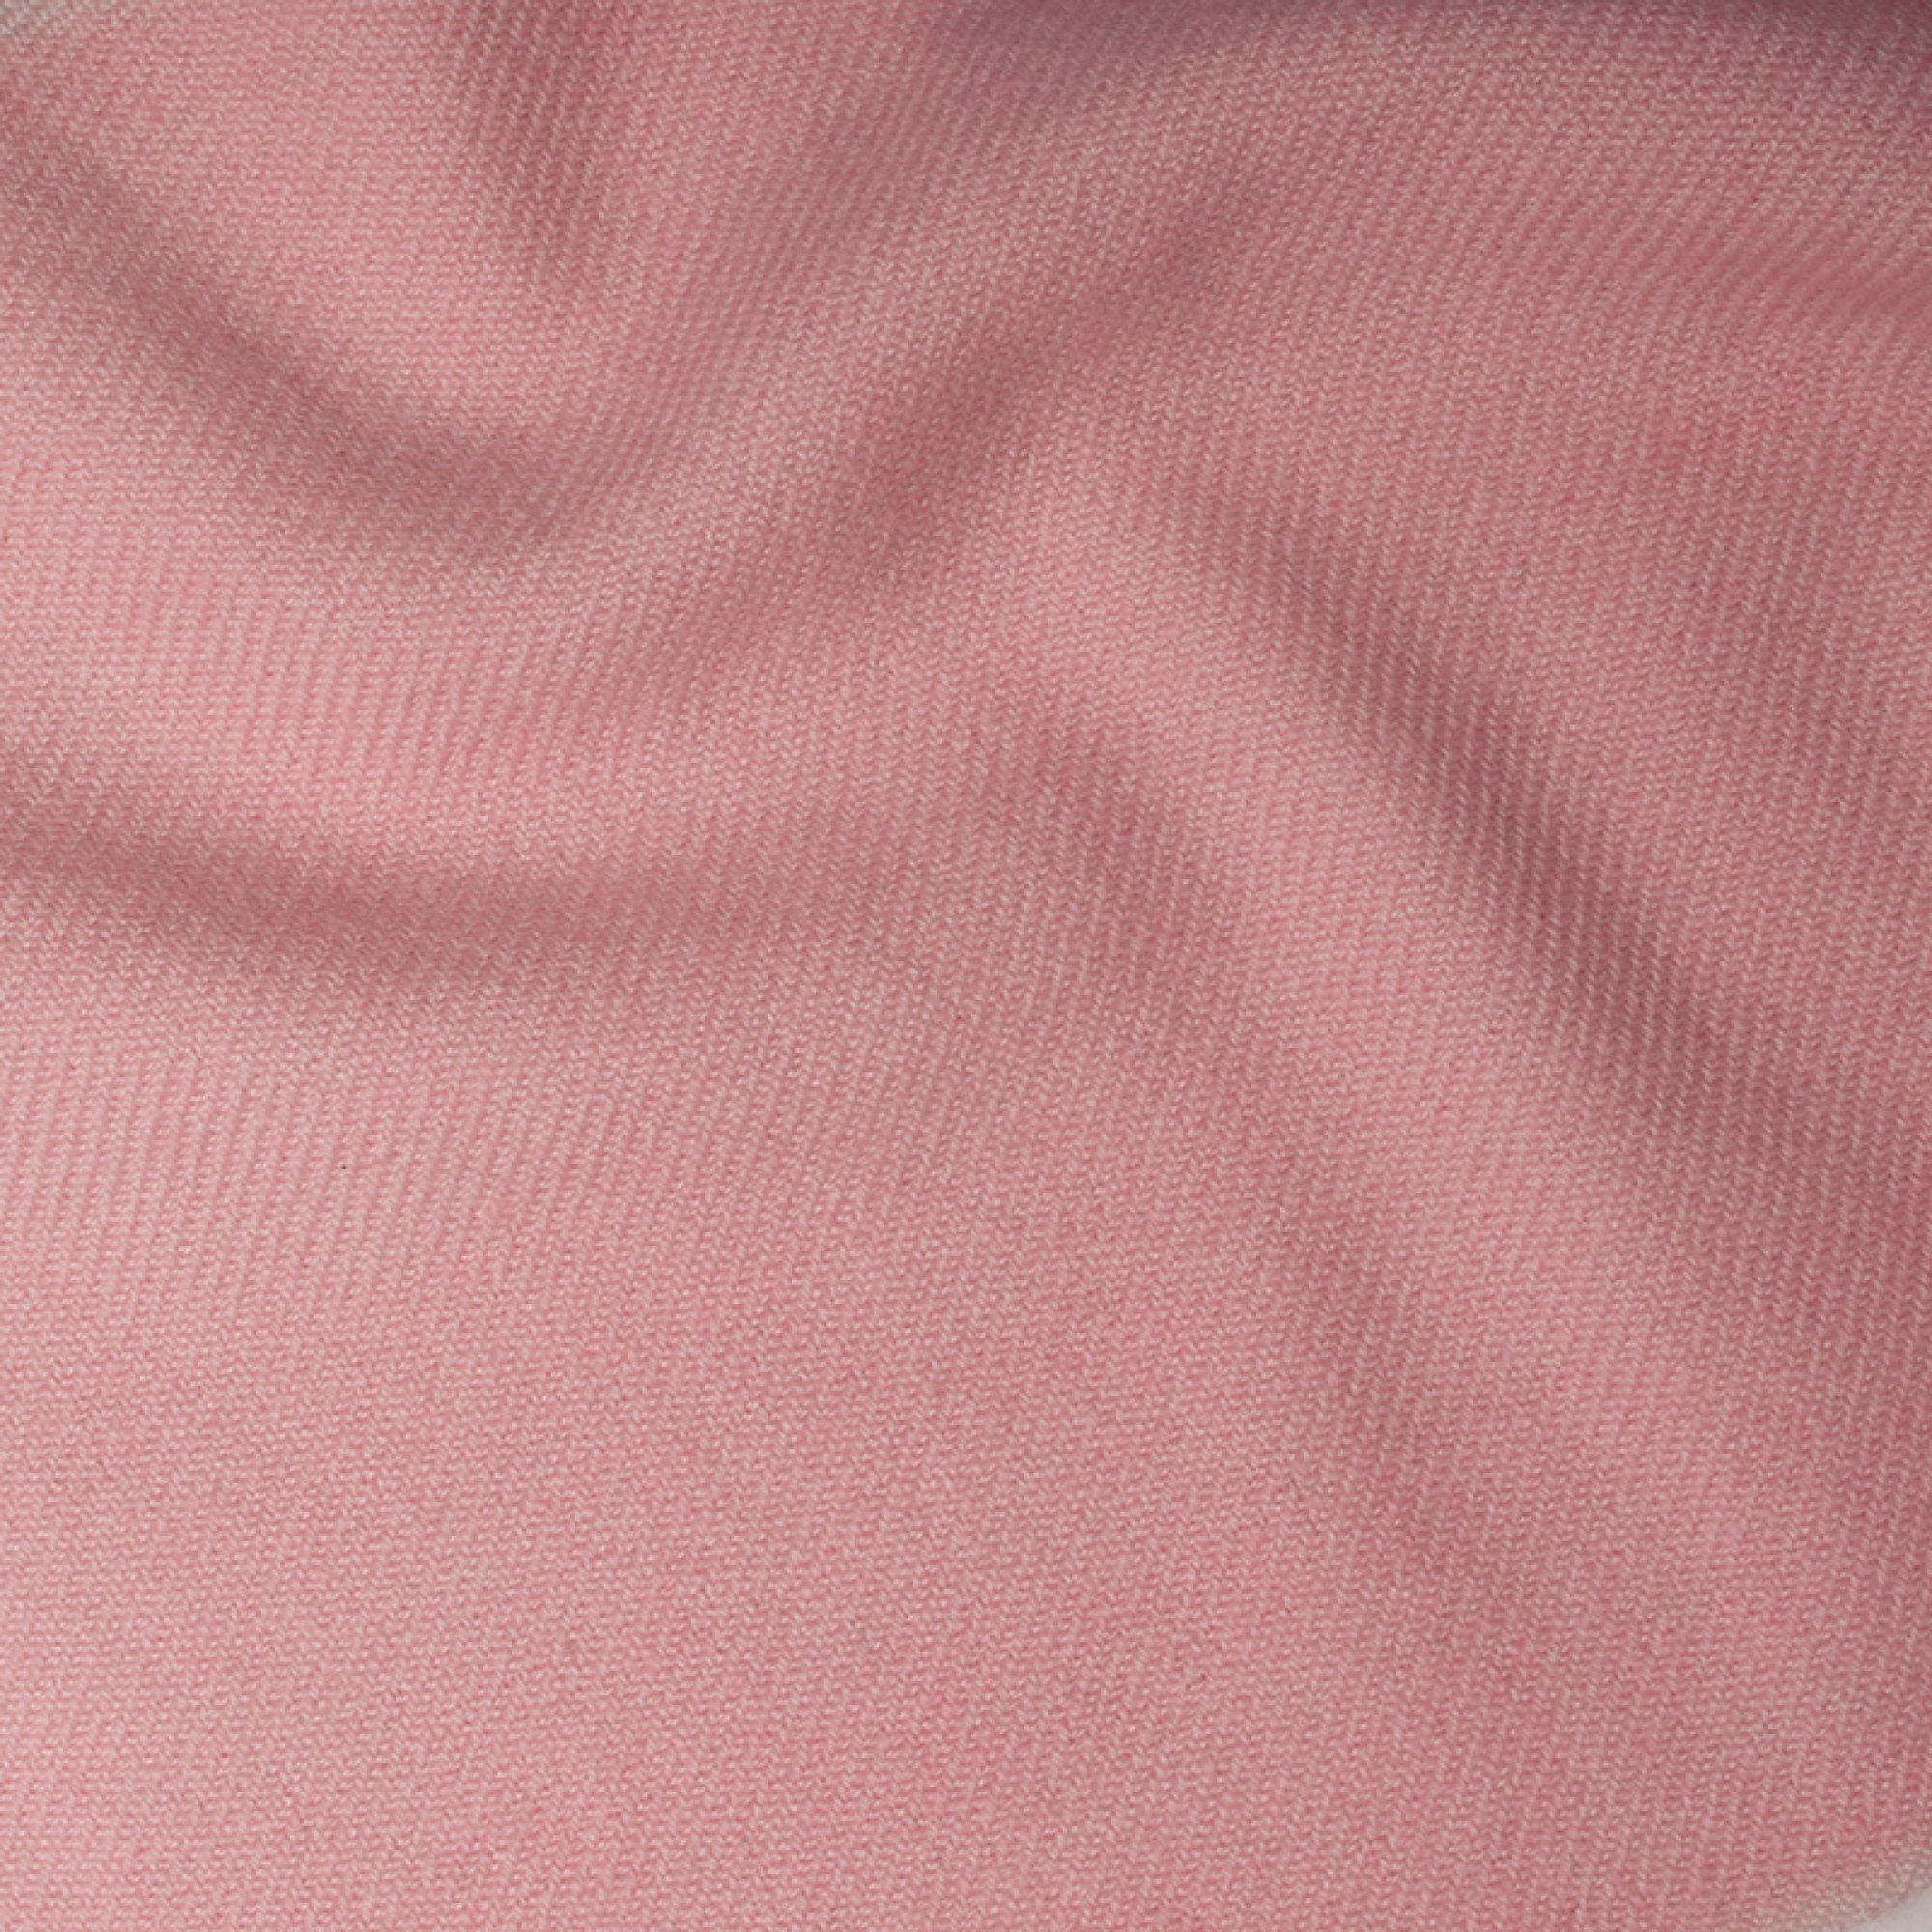 Cashmere cashmere donna frisbi 147 x 203 rosa confetto 147 x 203 cm